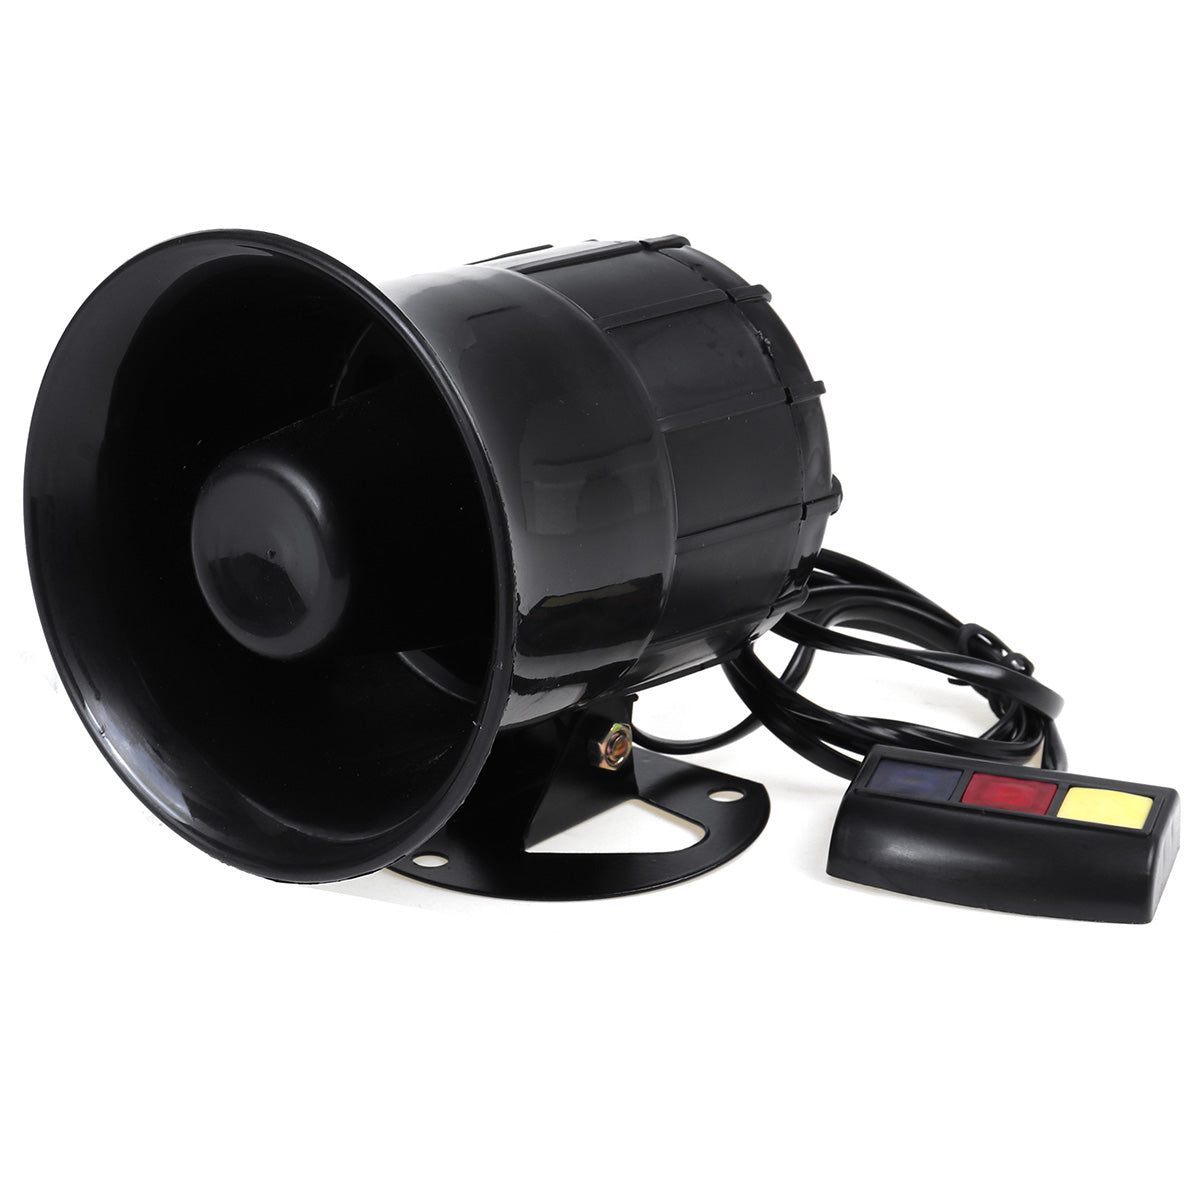 100W 12V 3 Tone Sound Loud Car Motorcycle Warning Alarm Police Fire Siren Horn - Auto GoShop